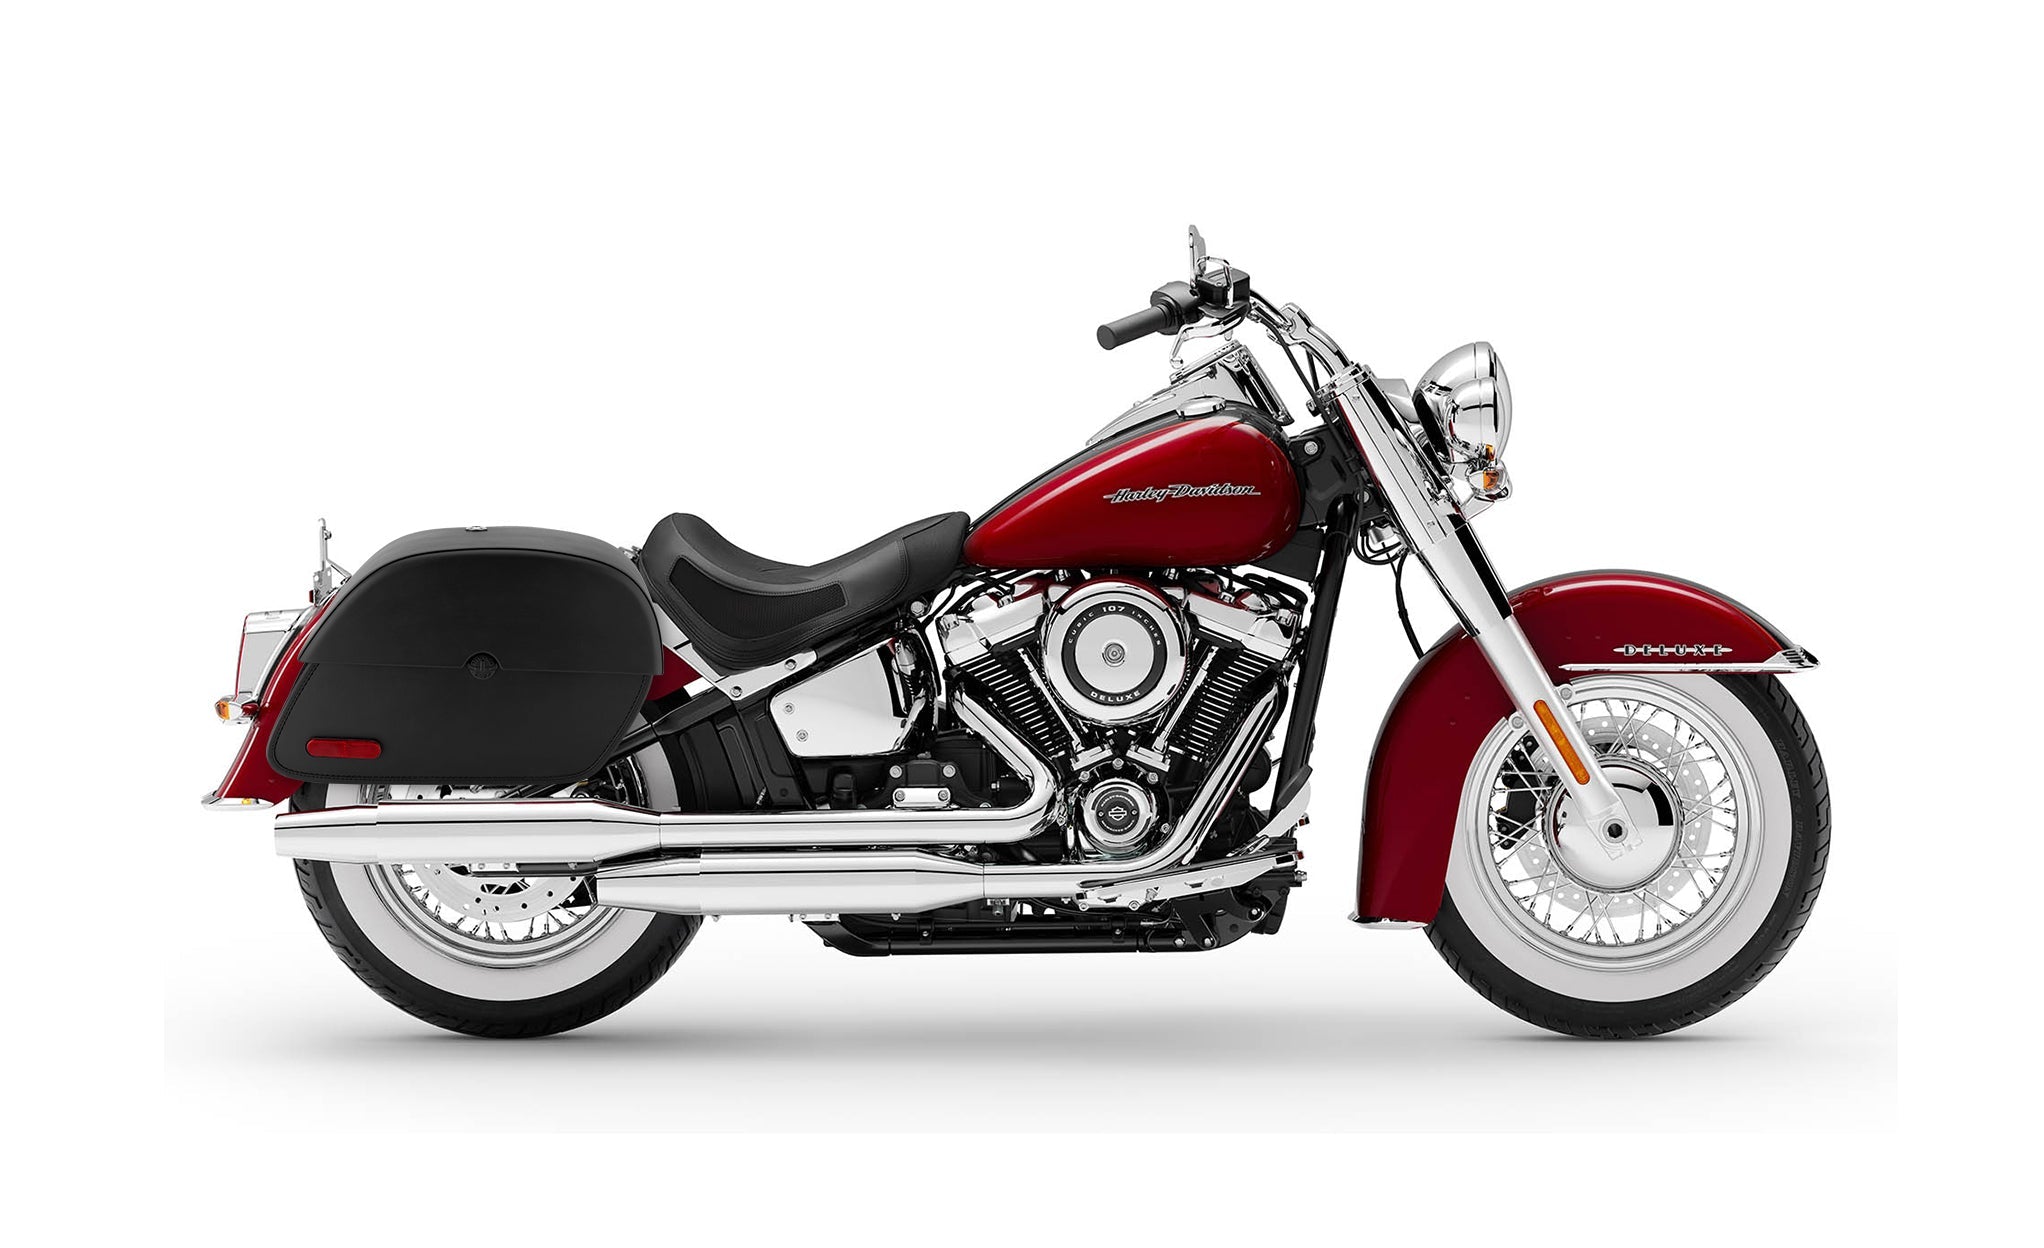 Viking Panzer Large Leather Motorcycle Saddlebags For Harley Davidson Softail Deluxe Flstn I on Bike Photo @expand